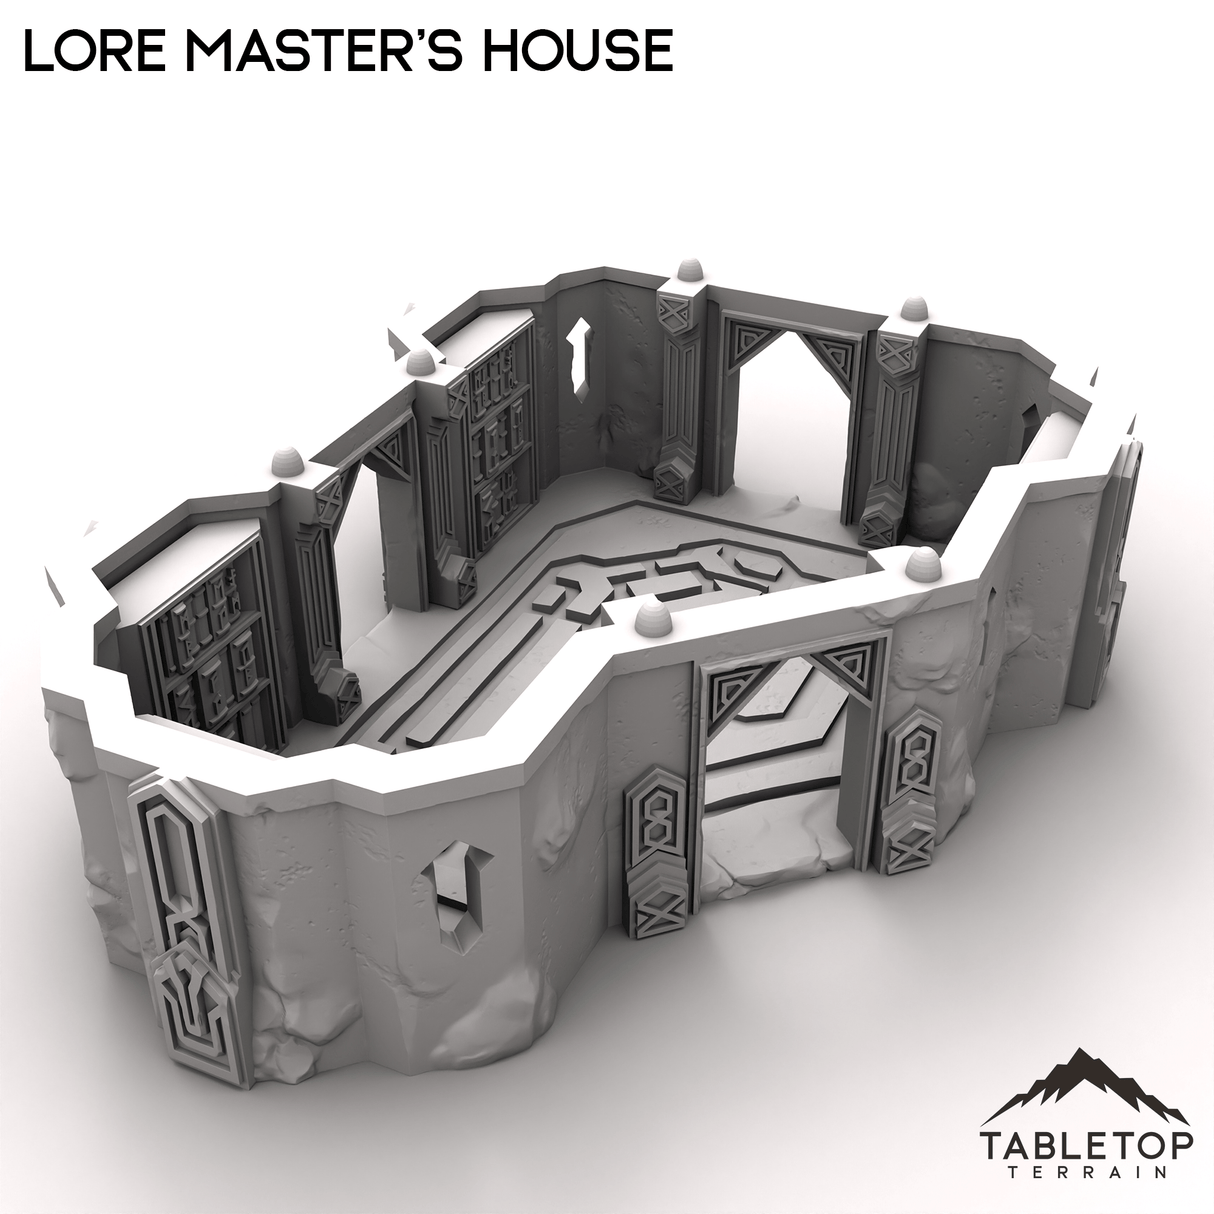 Tabletop Terrain Building Lore Master's House - Kingdom of Durak Deep